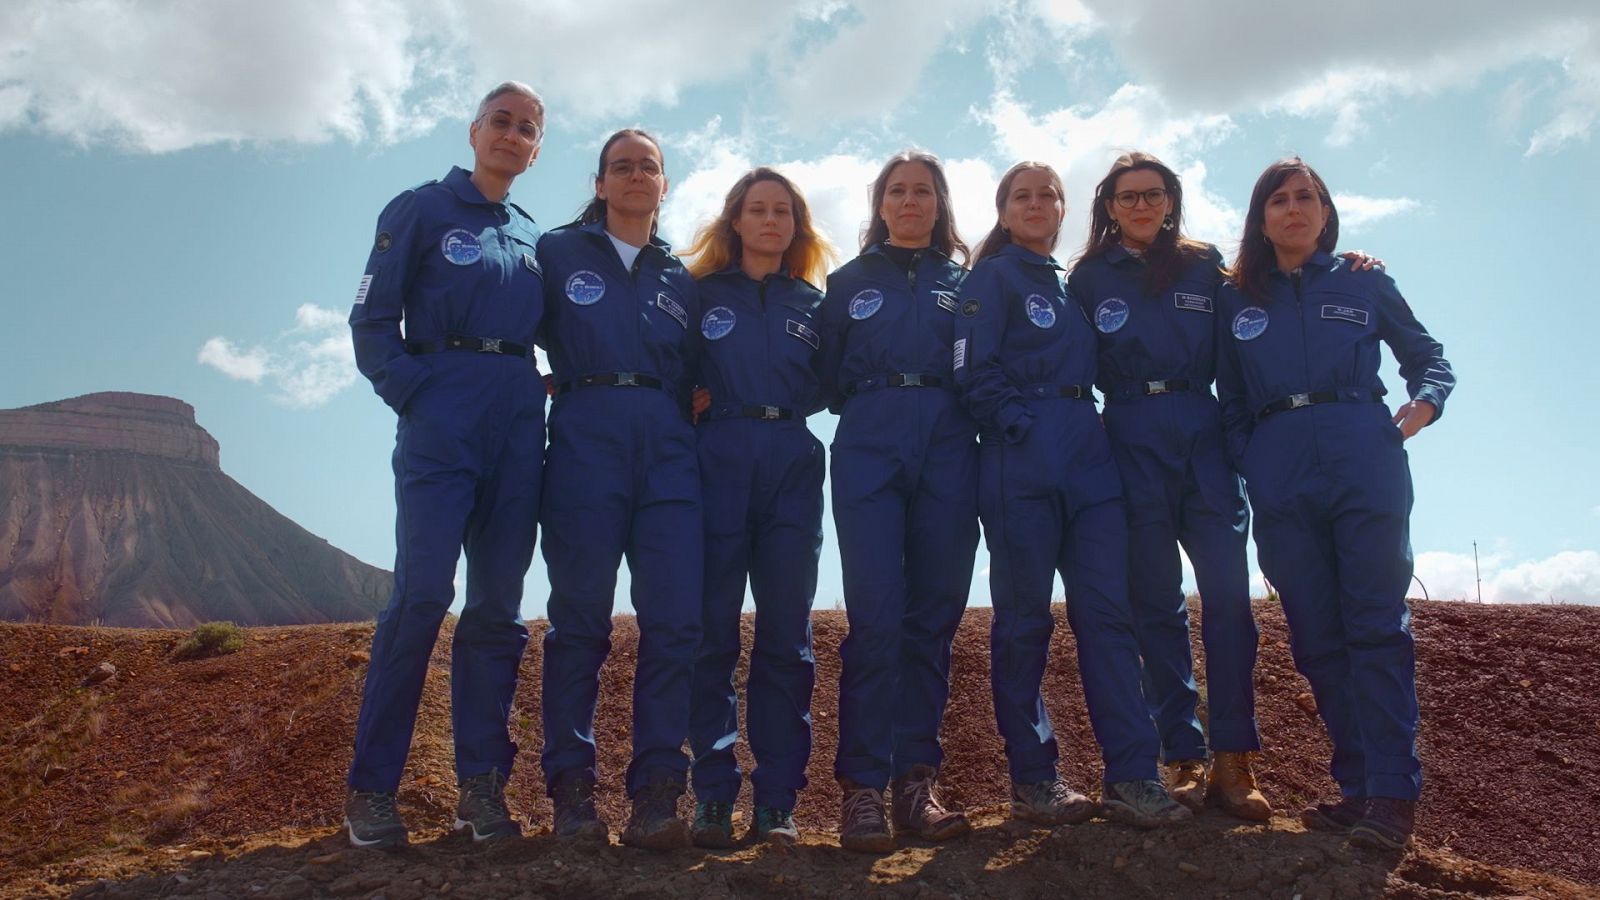 Somos documentales - Women on Mars - Ver ahora